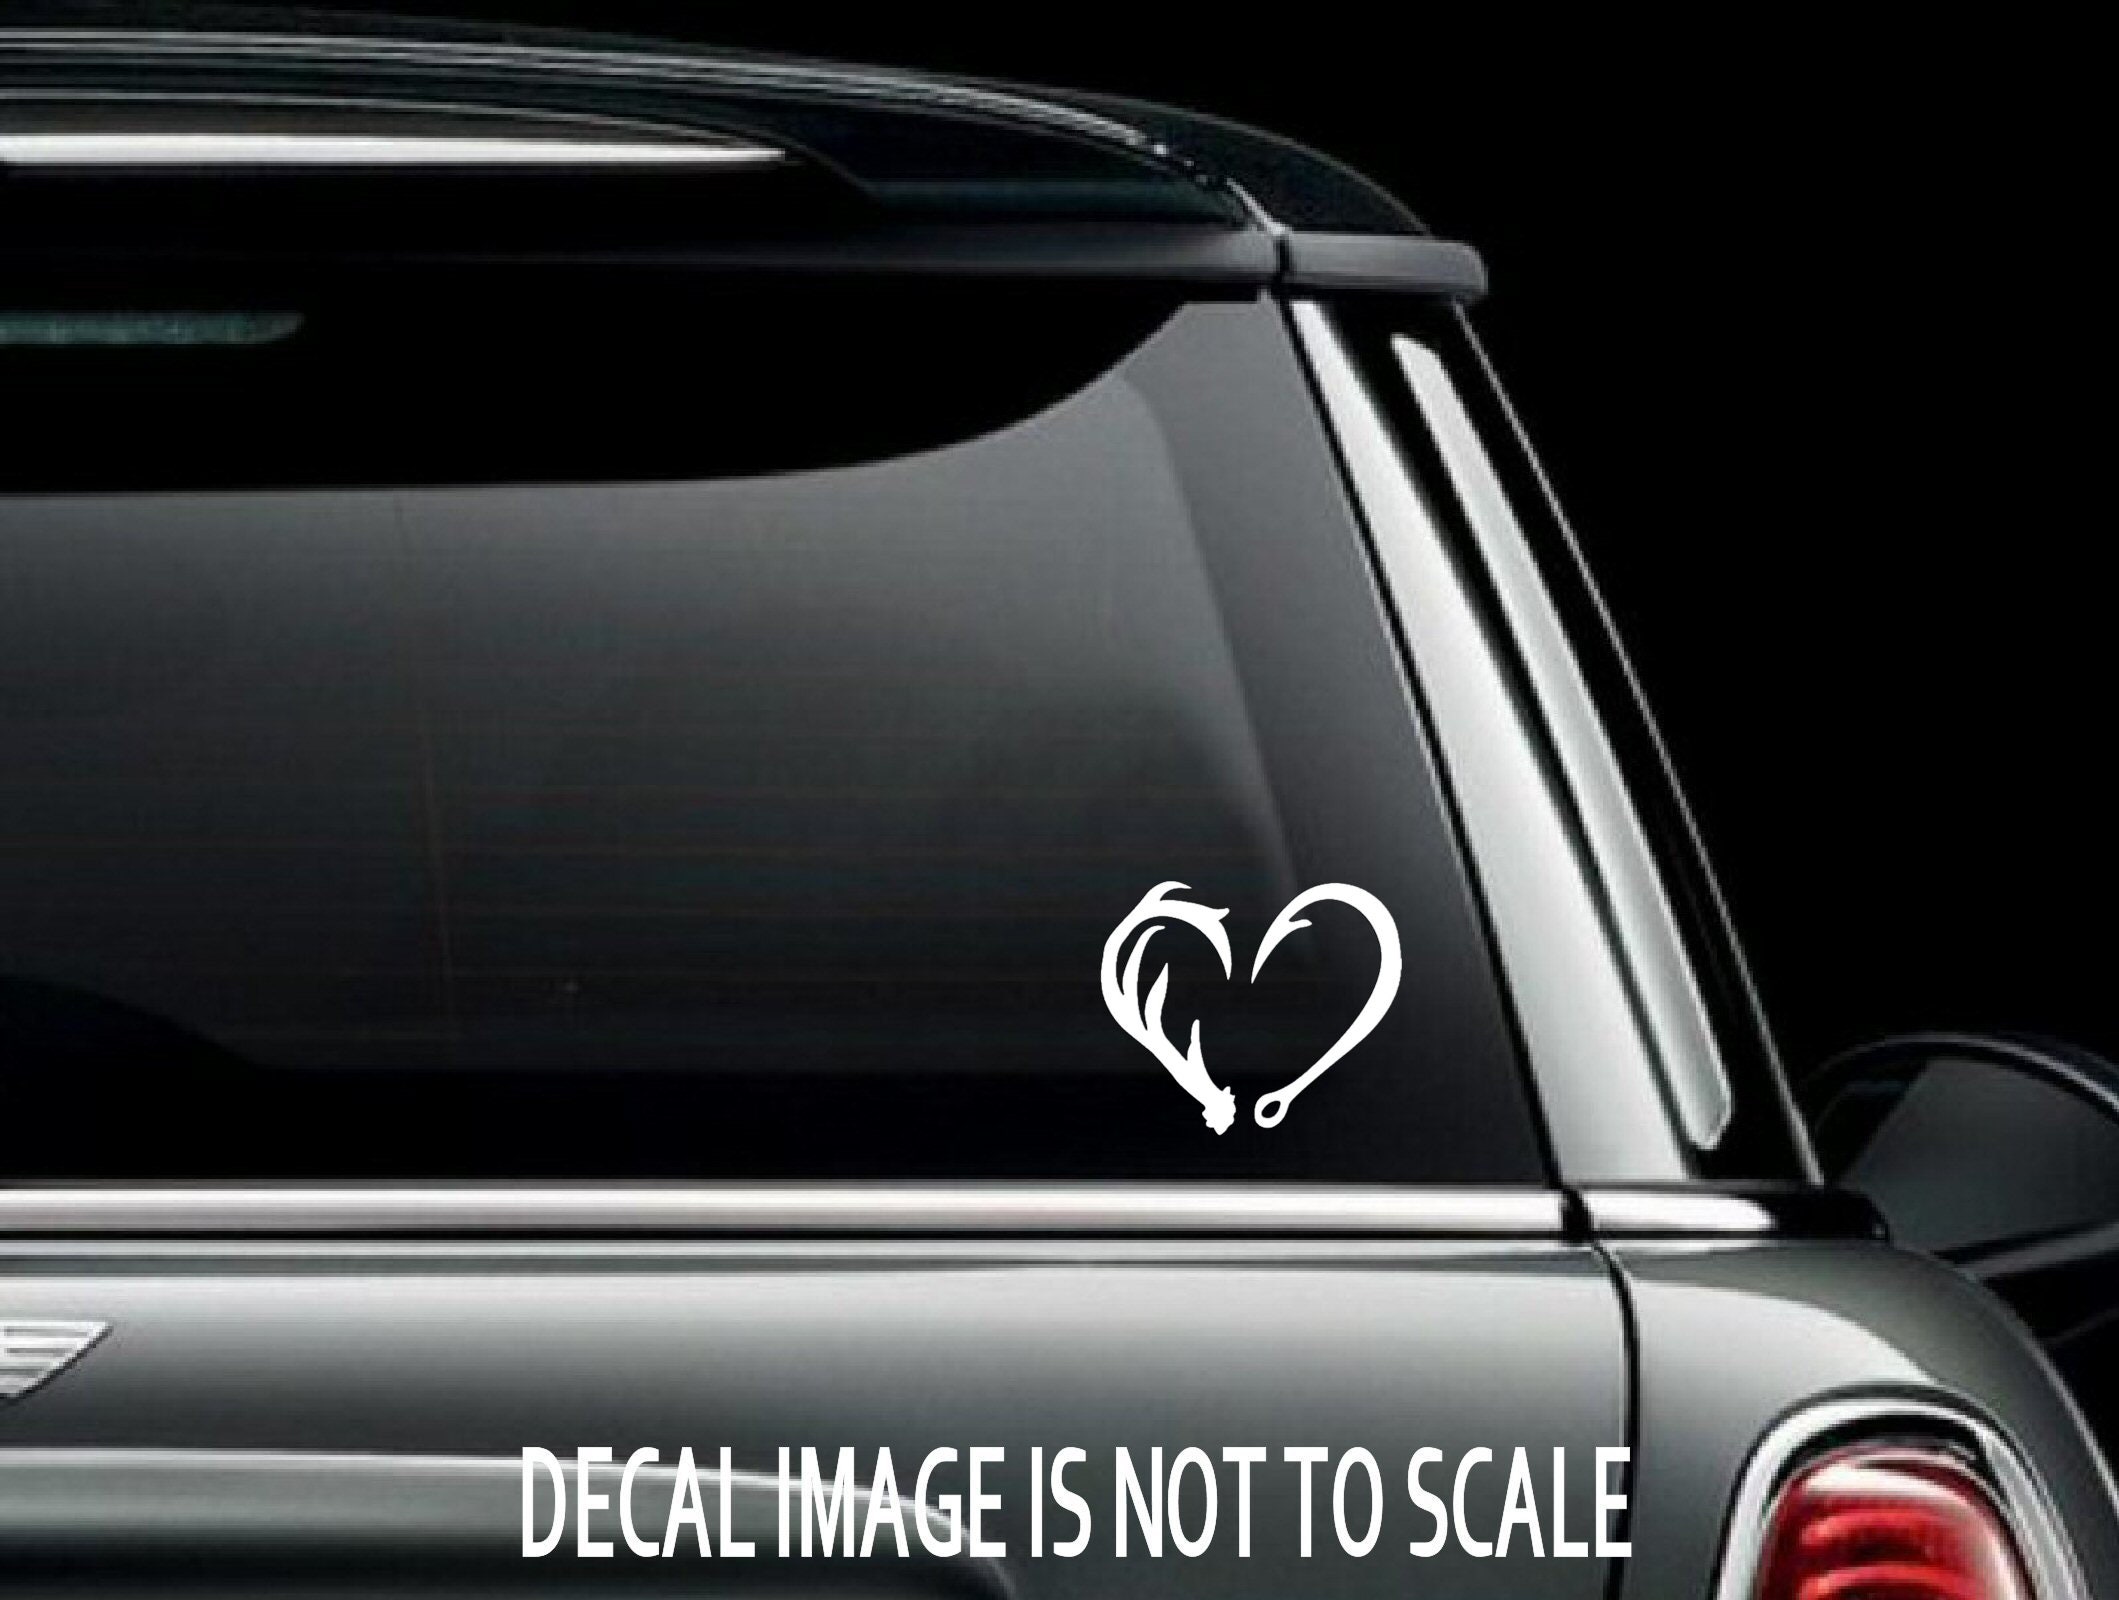 1pc Creative Car Sticker With Heart Decor For Car Window, Glass